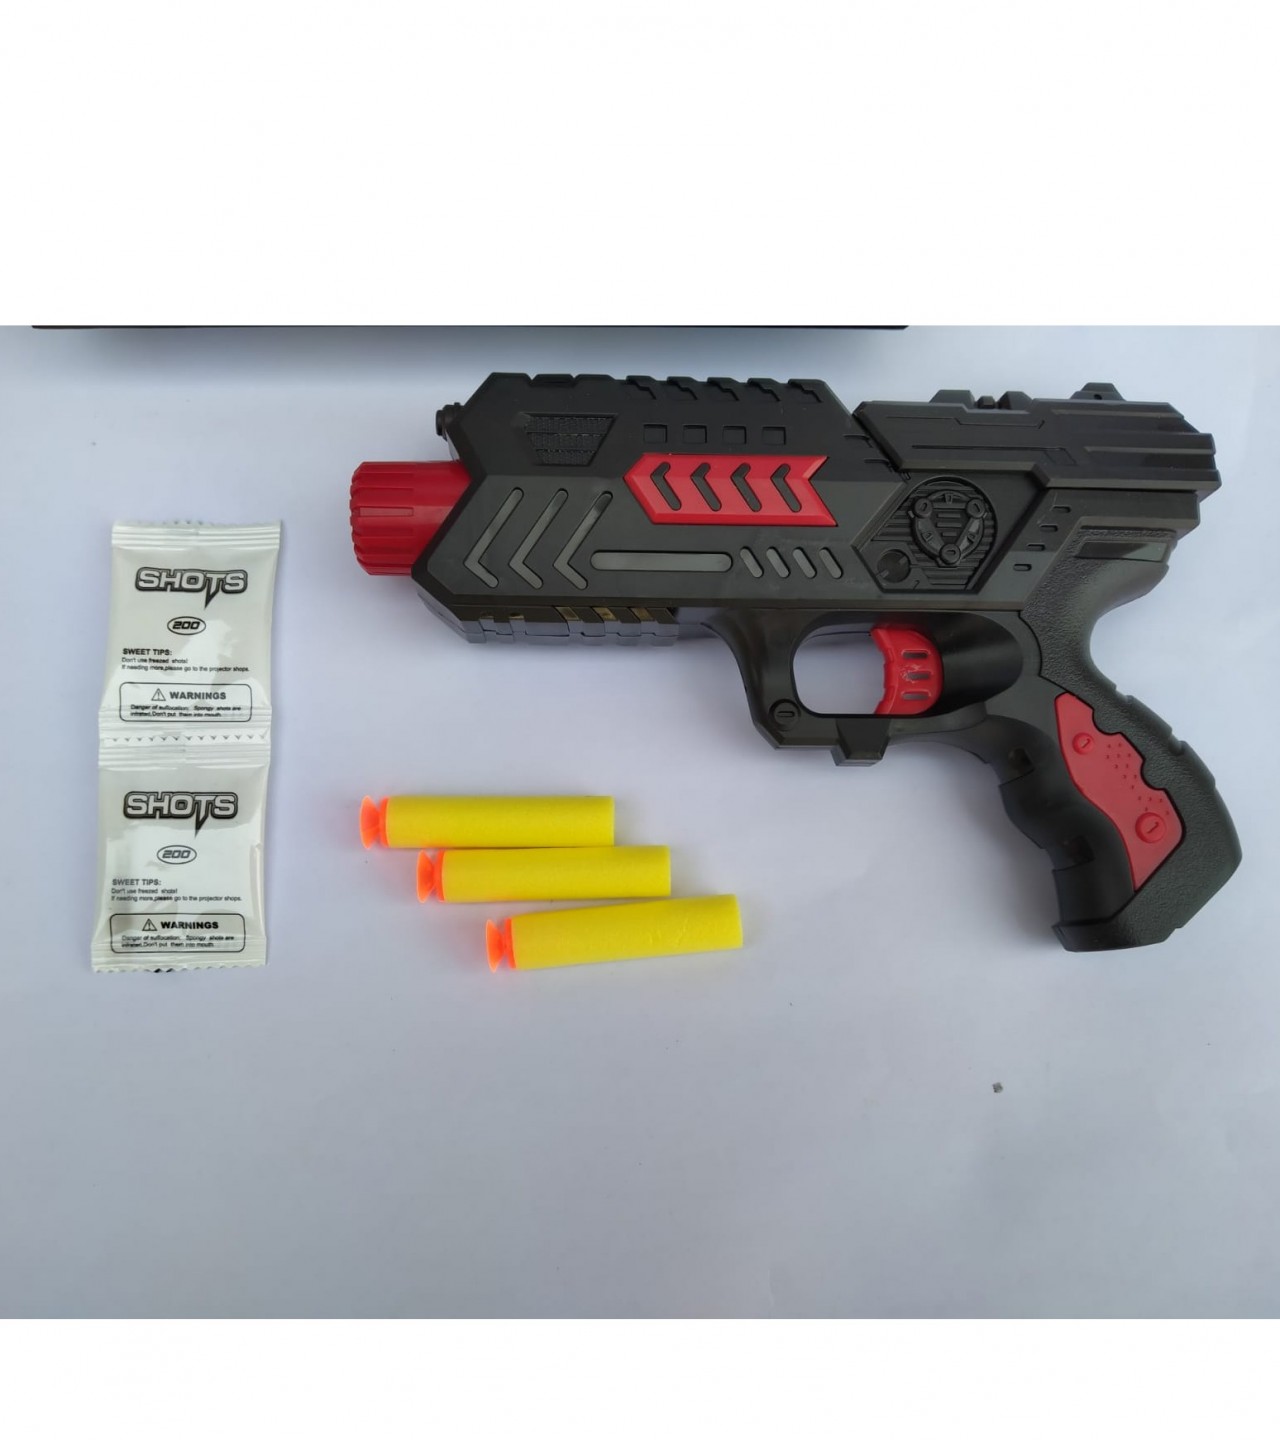 Black Hawk Gun Toy (M02+) Guns & Darts  (Black, Red)